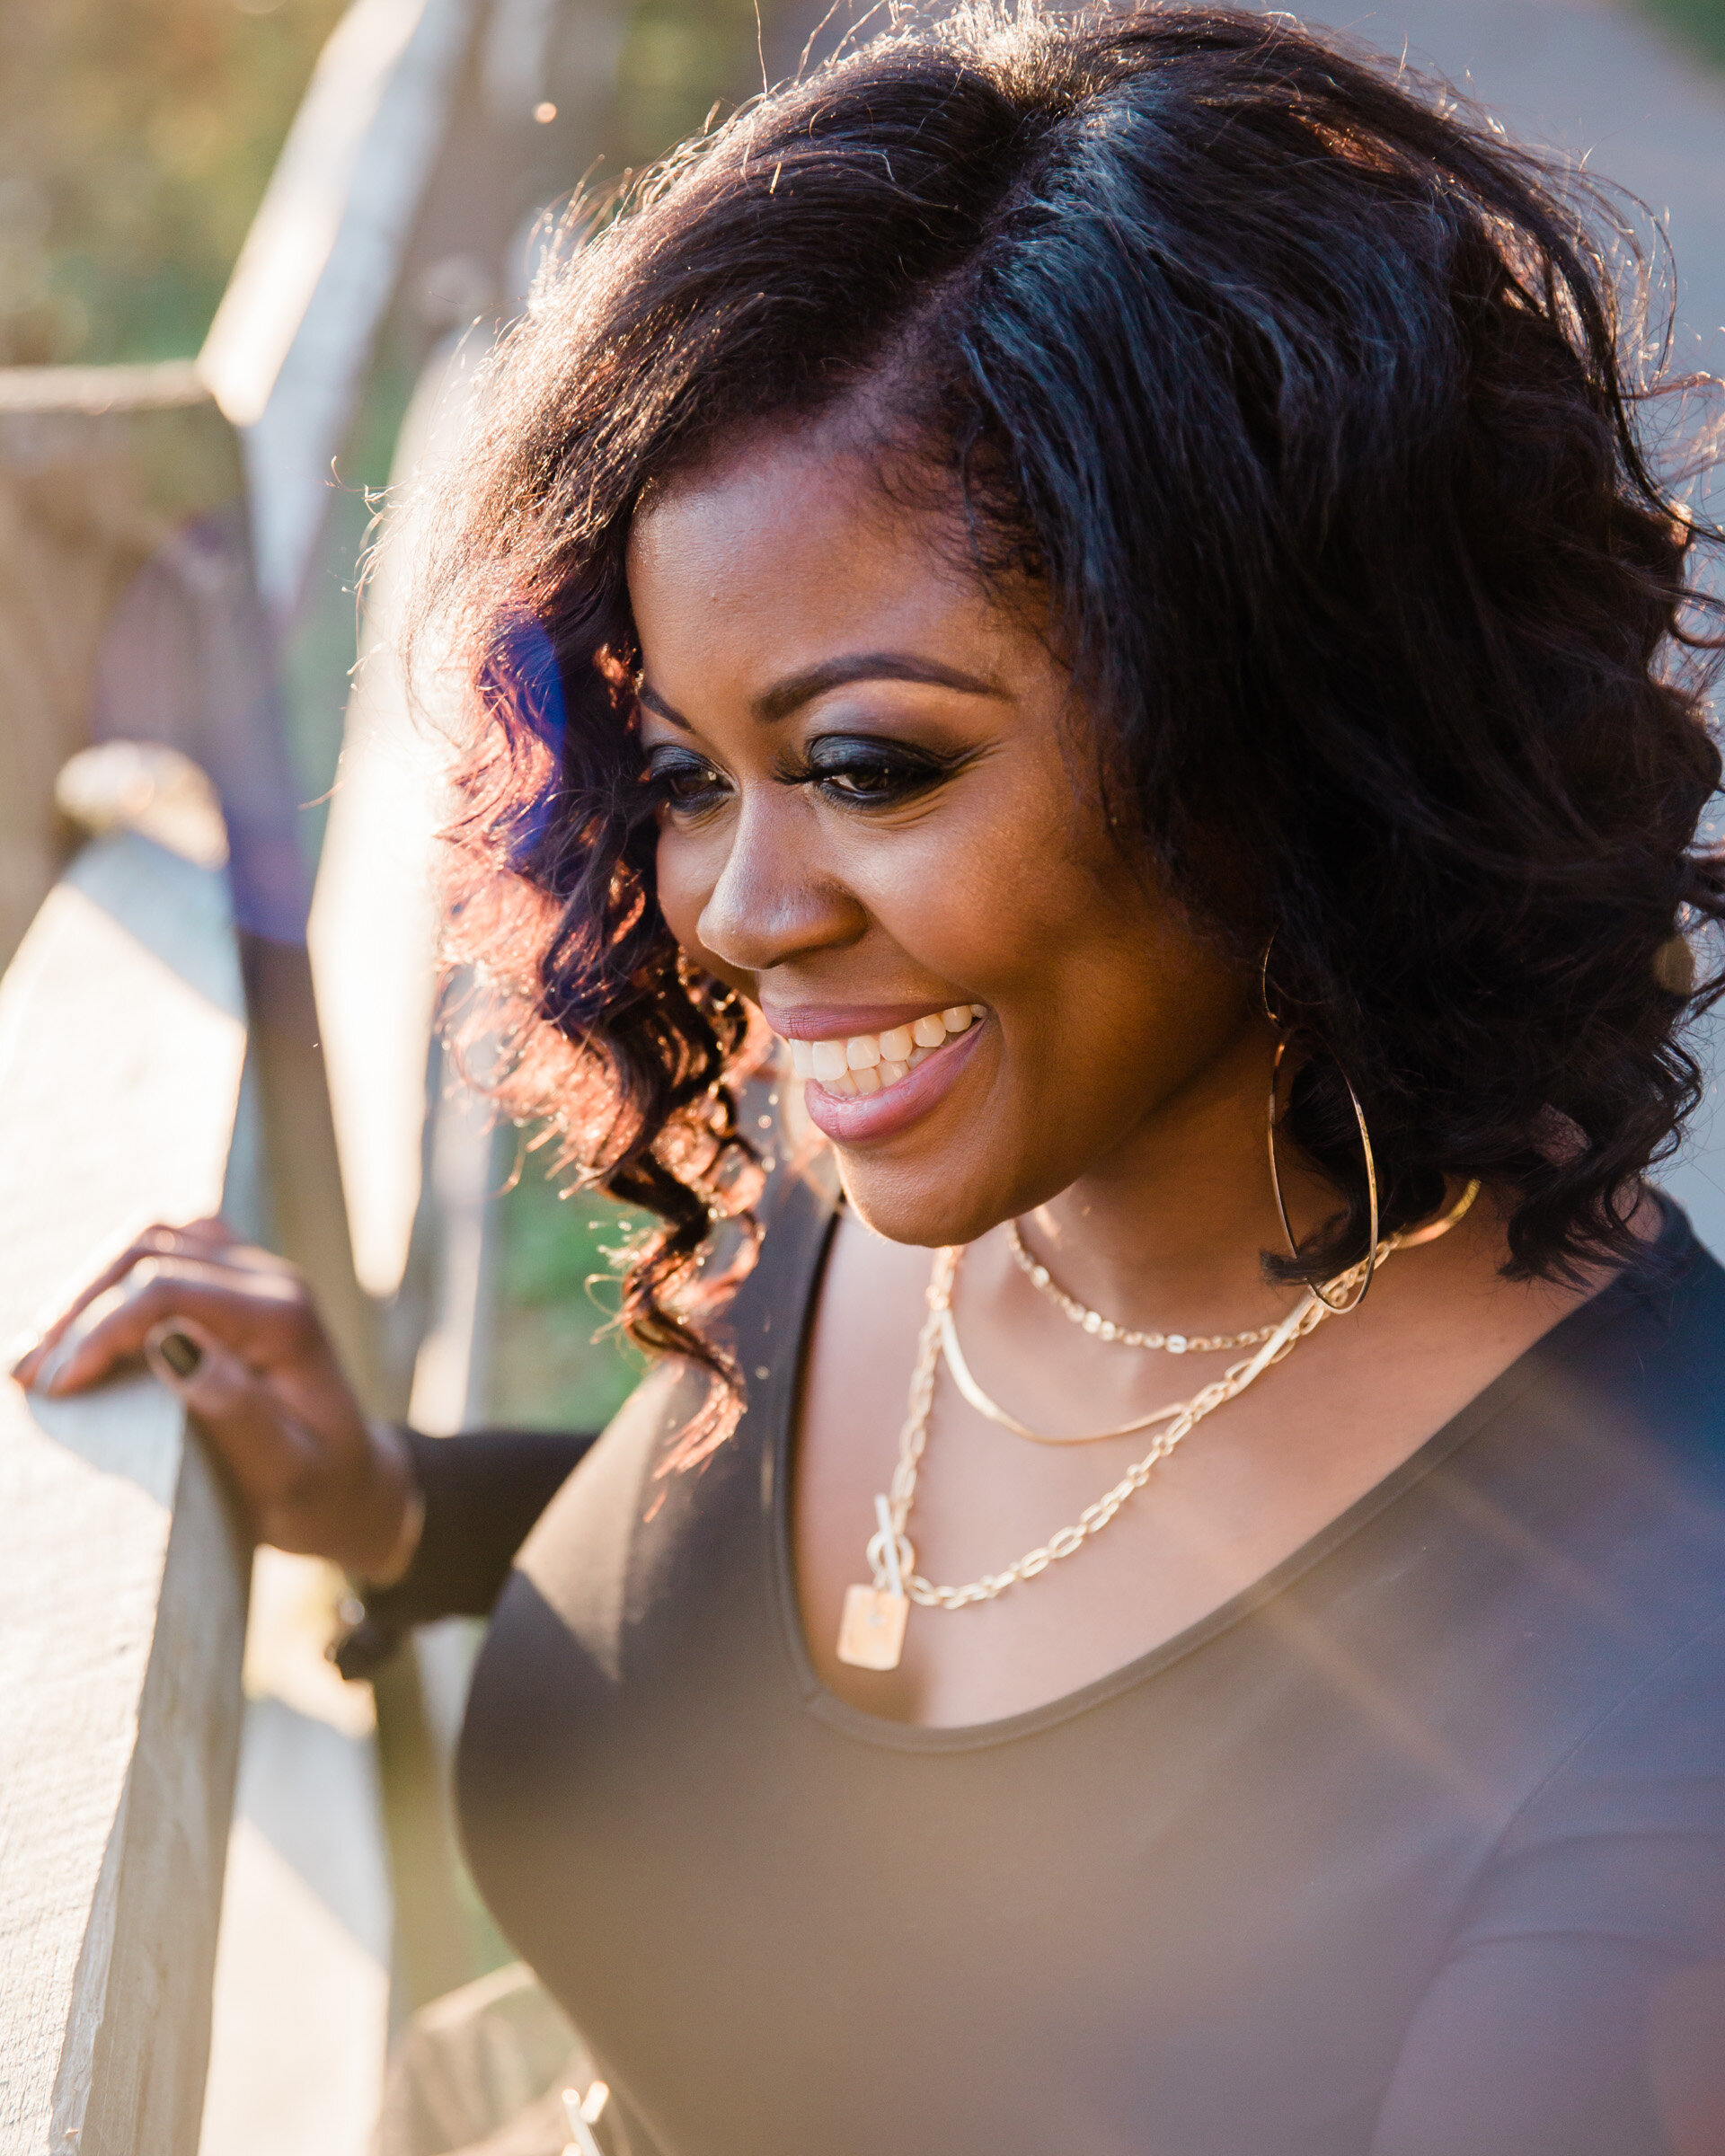 Black Female Portrait Photographer in Baltimore 40t Birthday Photoshoot by Megapixels Media Photography-44.jpg